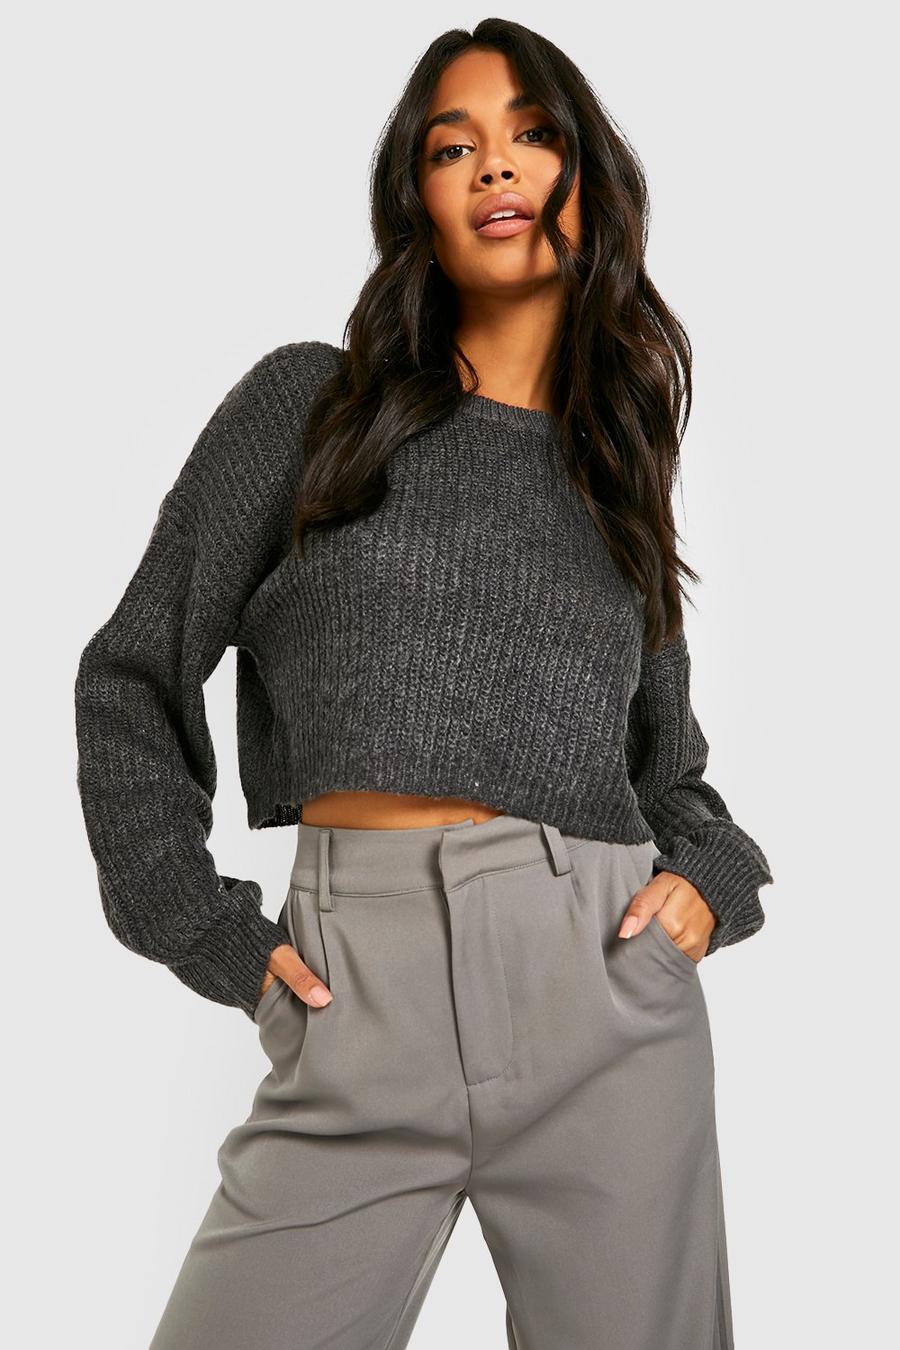 Charcoal grey Balloon Sleeve Crop Sweater